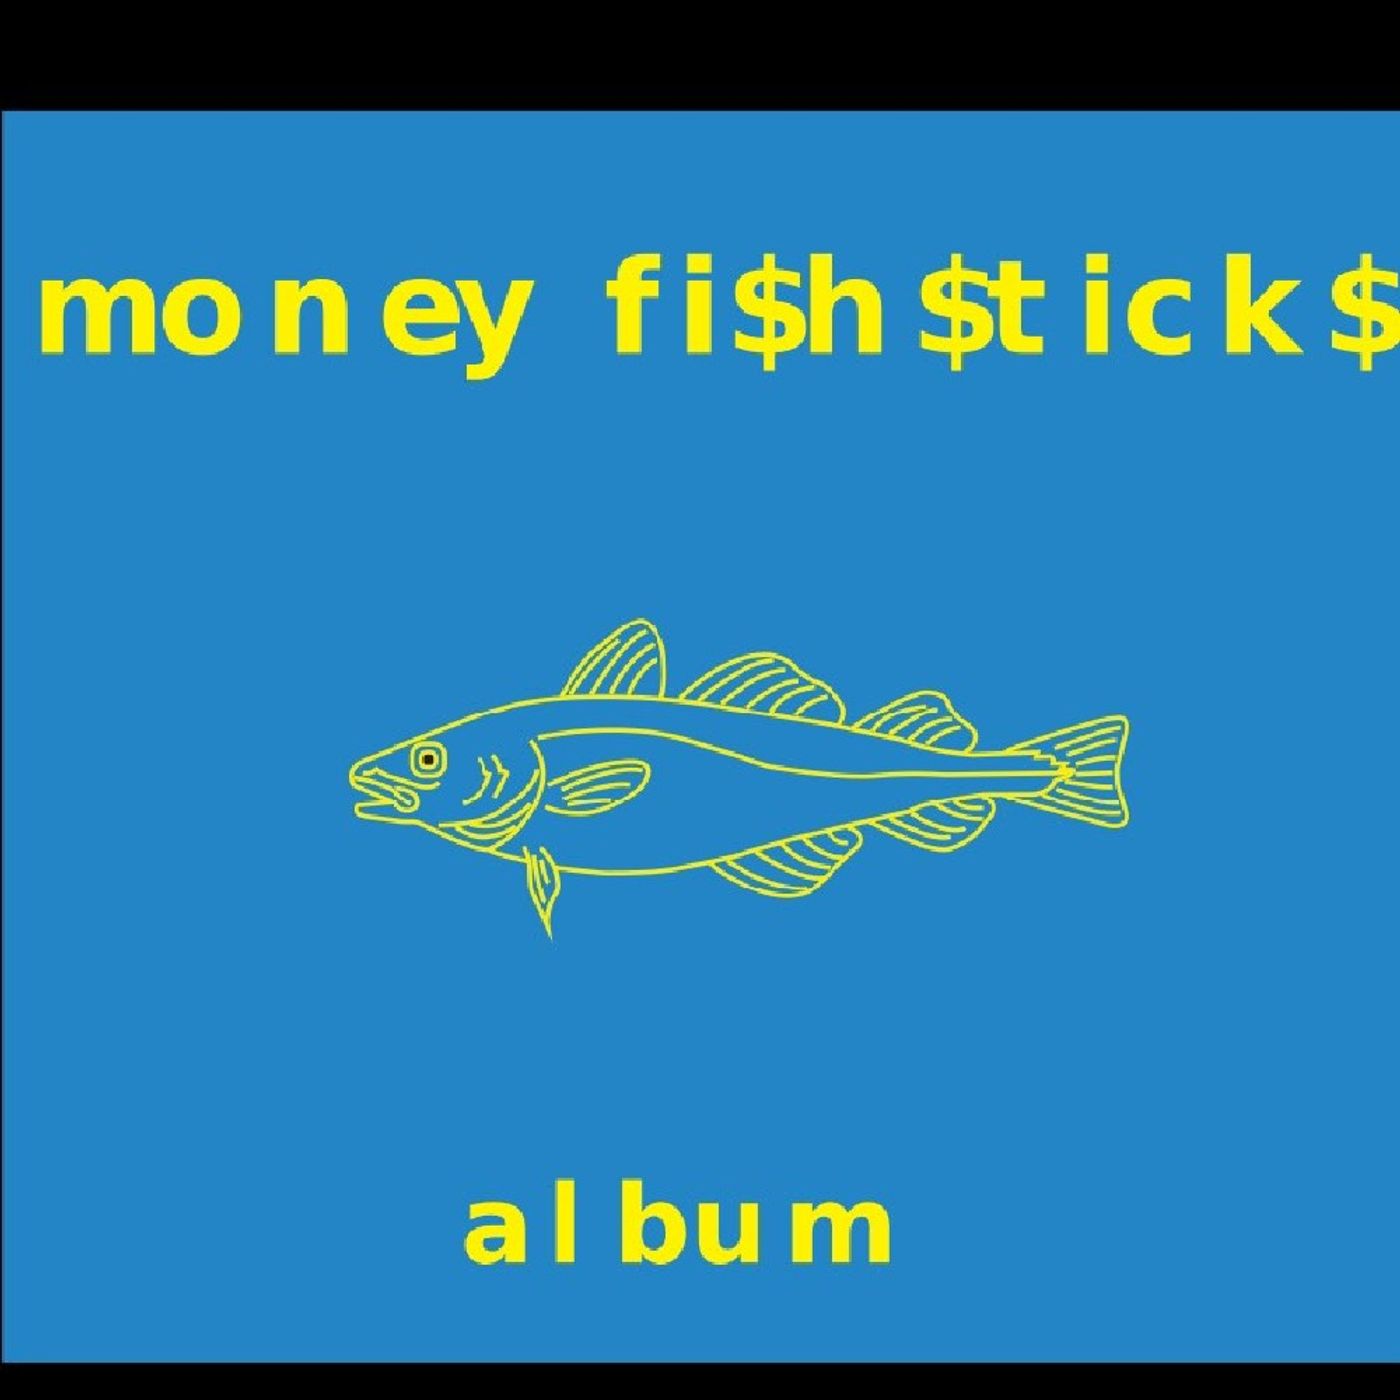 Moneyfishsticks's show